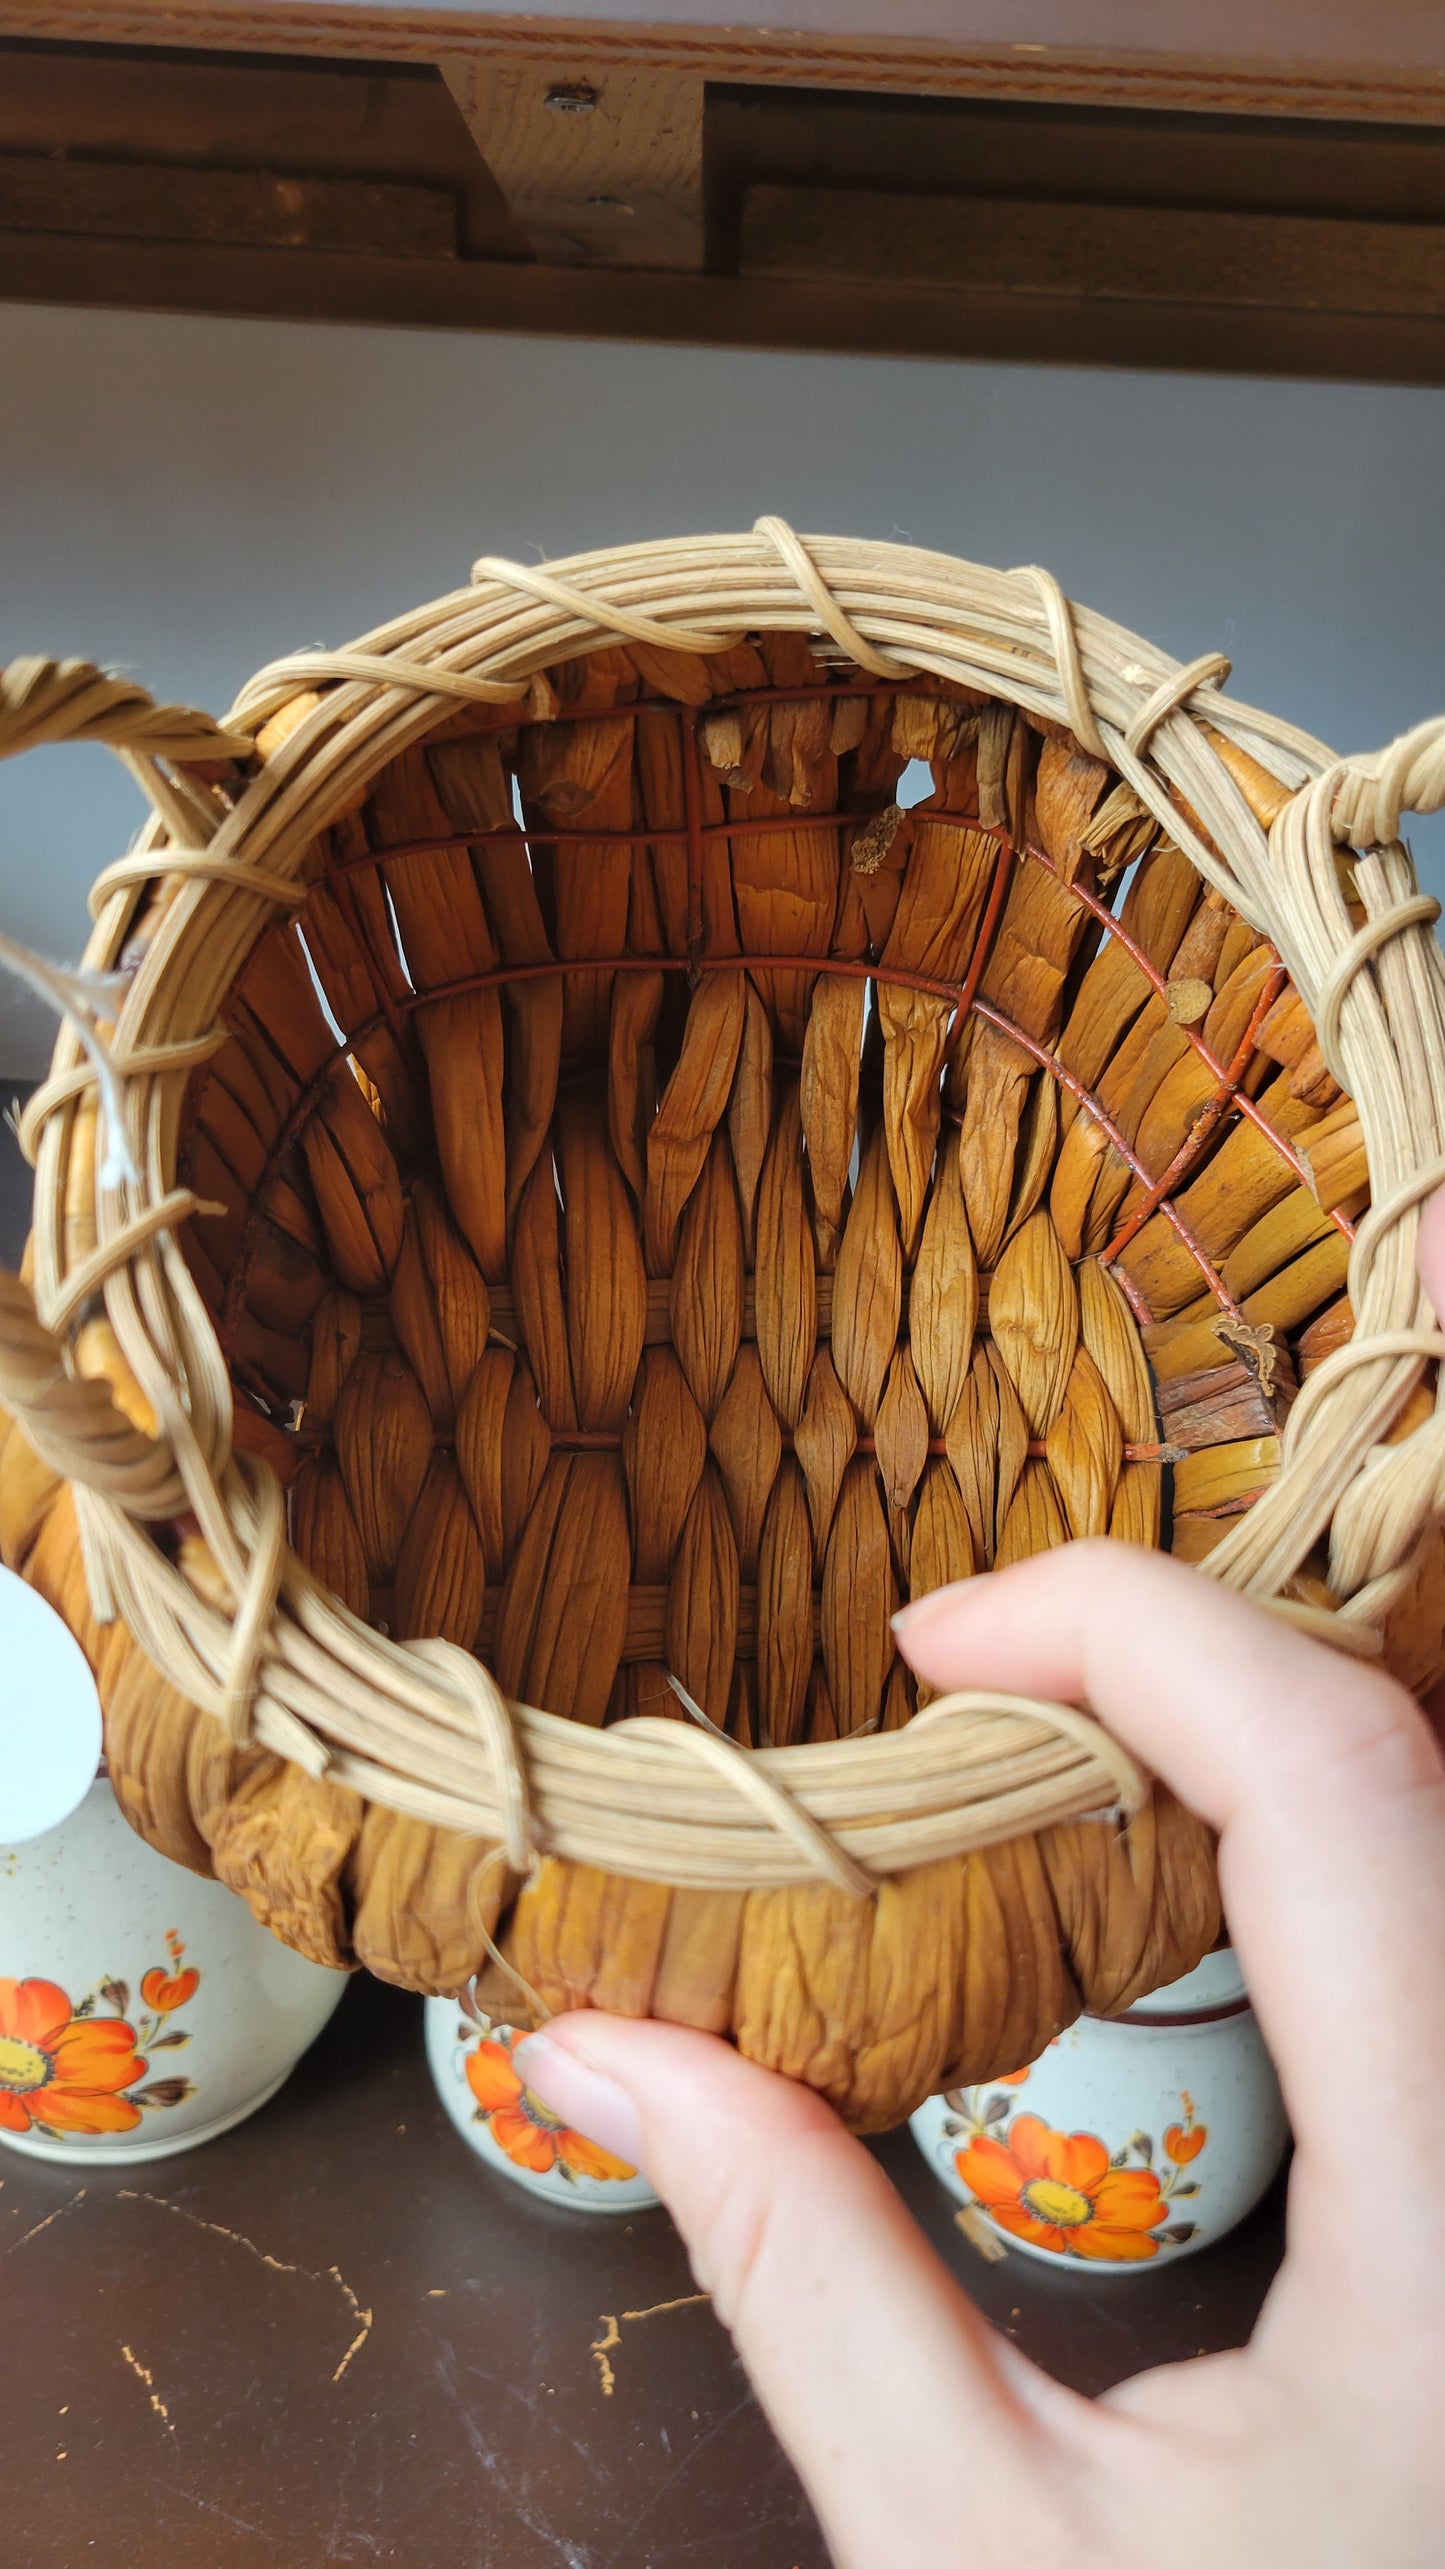 Corn husk (?) Basket